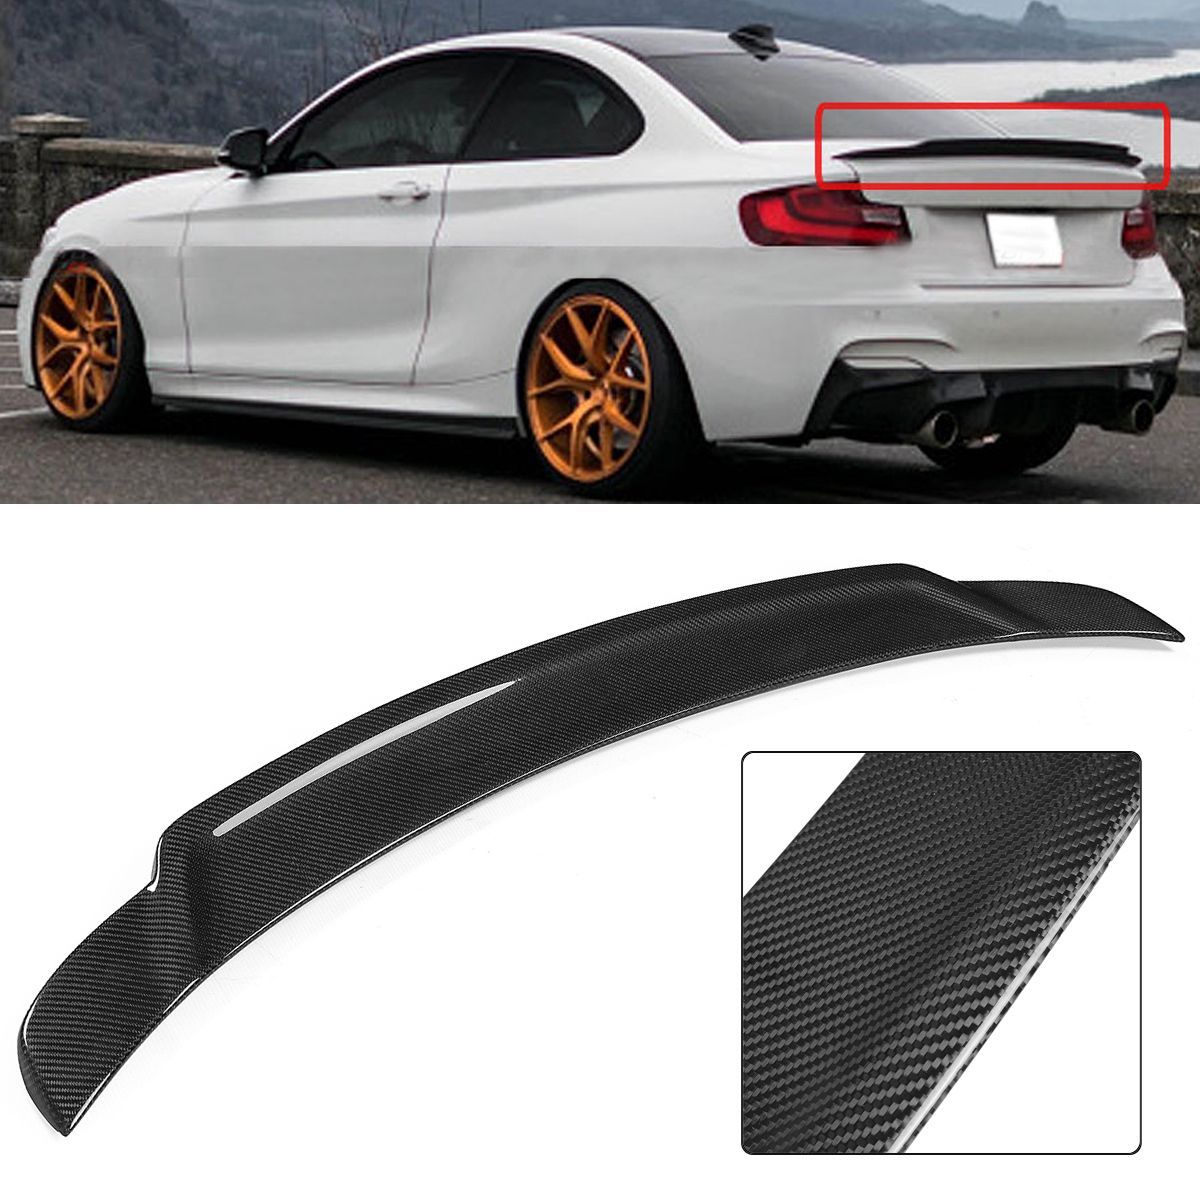 Car-Carbon-Fiber-Rear-Trunk-Lid-Spoiler-Wing-for-BMW-2014-2018-F22-M235i-220i-228i-M2-1515776